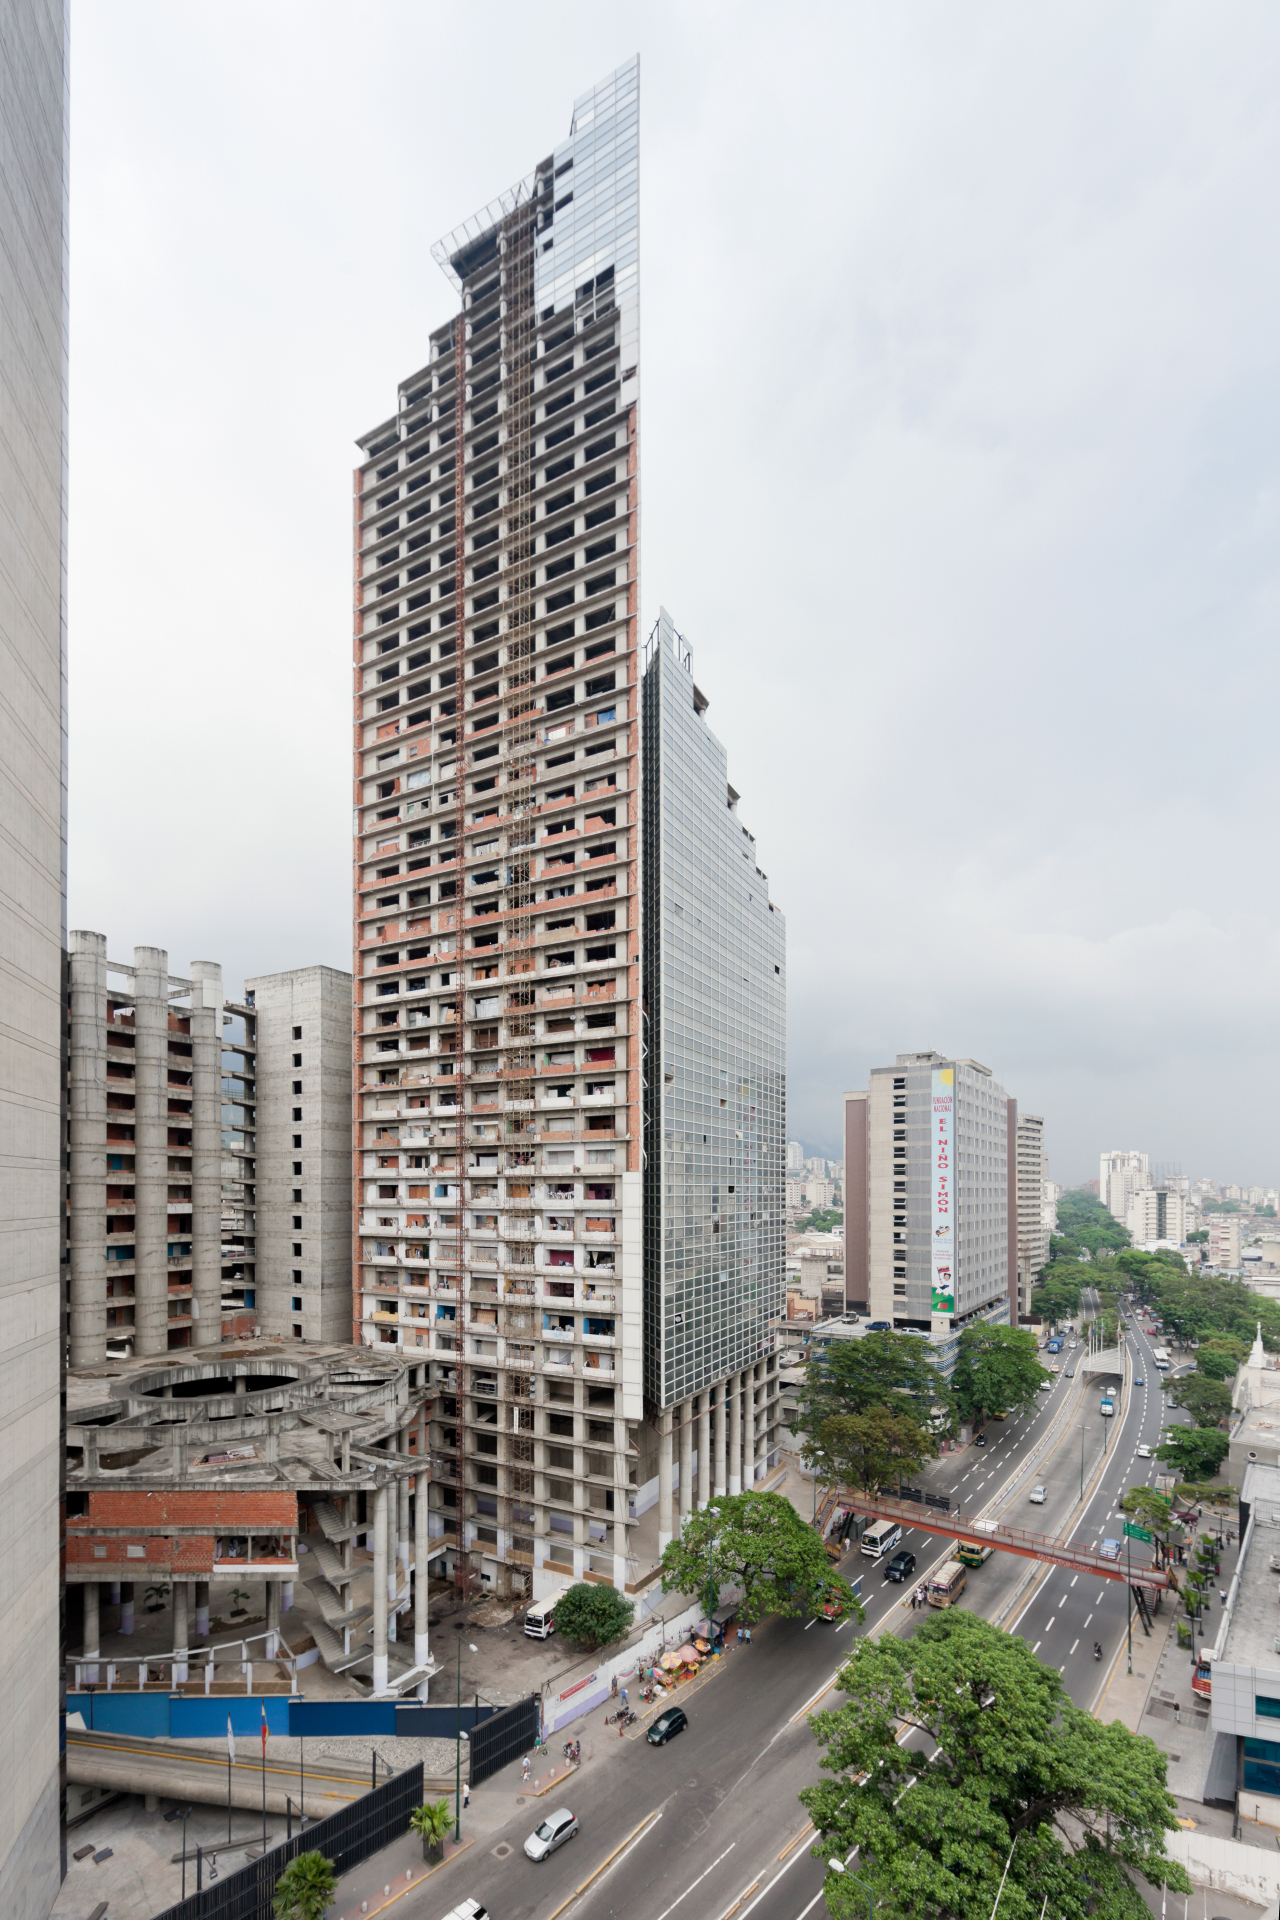 Torre David in Caracas, Venezuela (Alfredo Brillembourg)